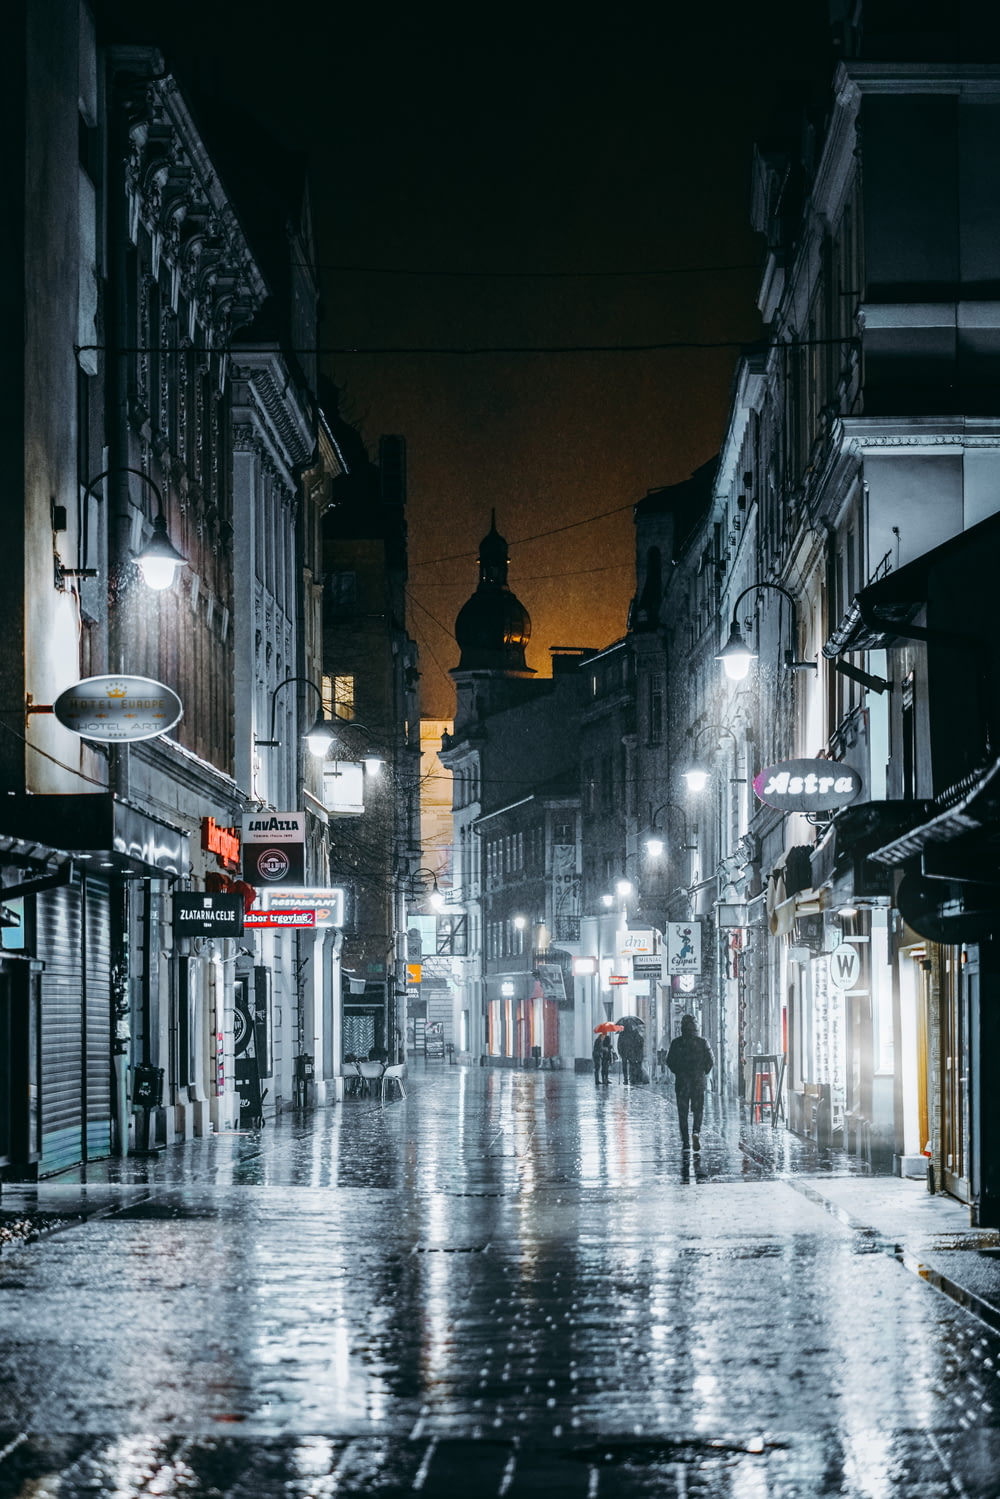 a person walking down a wet street